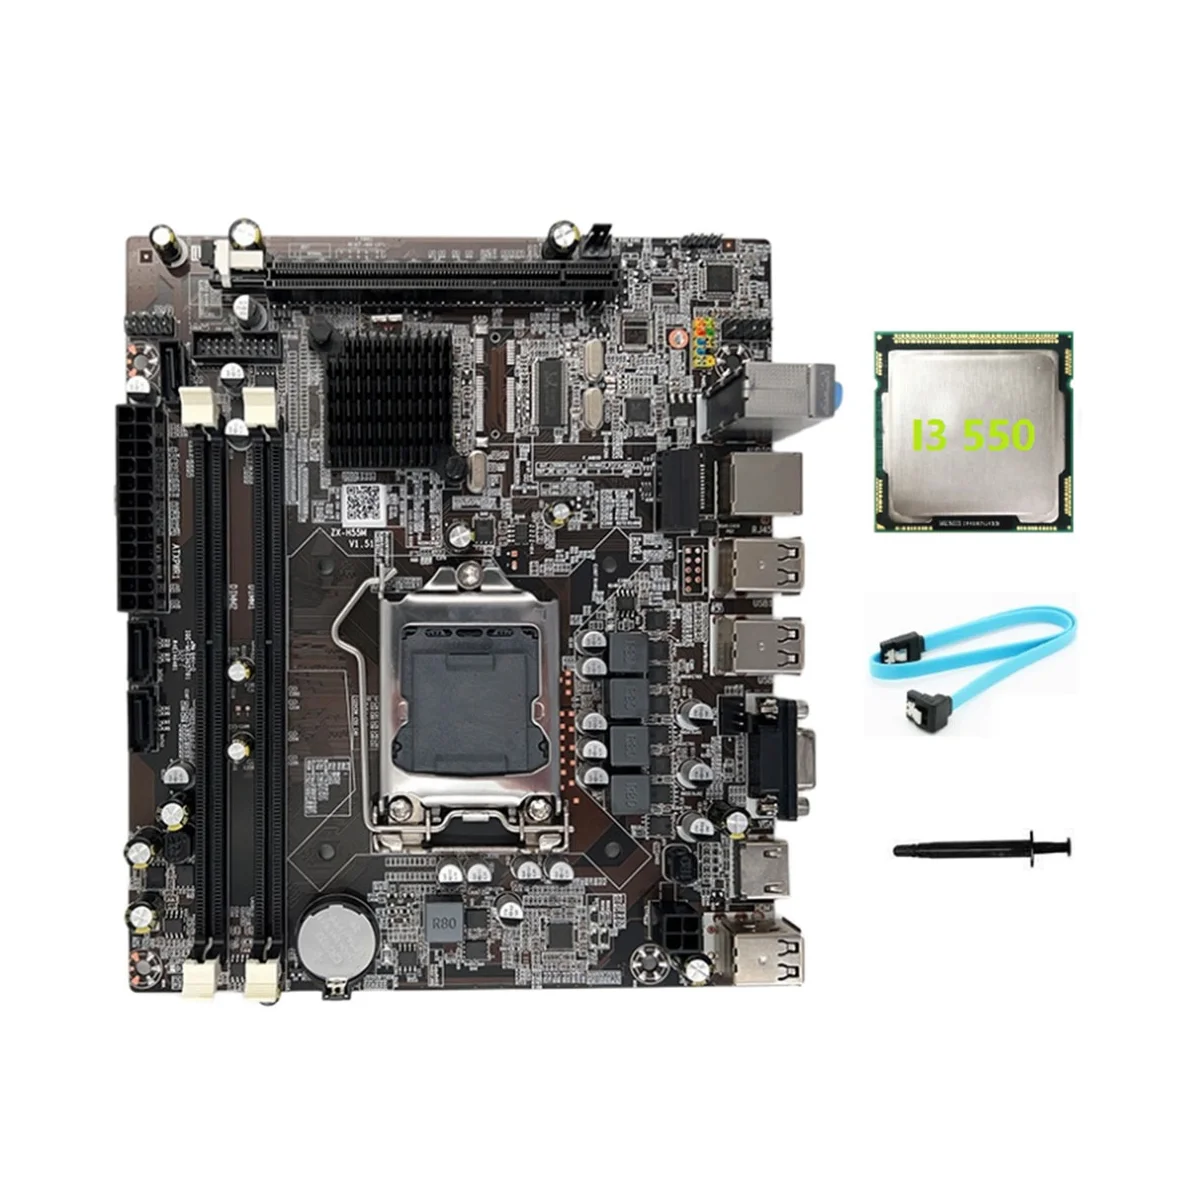 

H55 Motherboard LGA1156 Supports I3 530 I5 760 Series CPU DDR3 Memory Motherboard+I3 550 CPU+SATA Cable+Thermal Grease